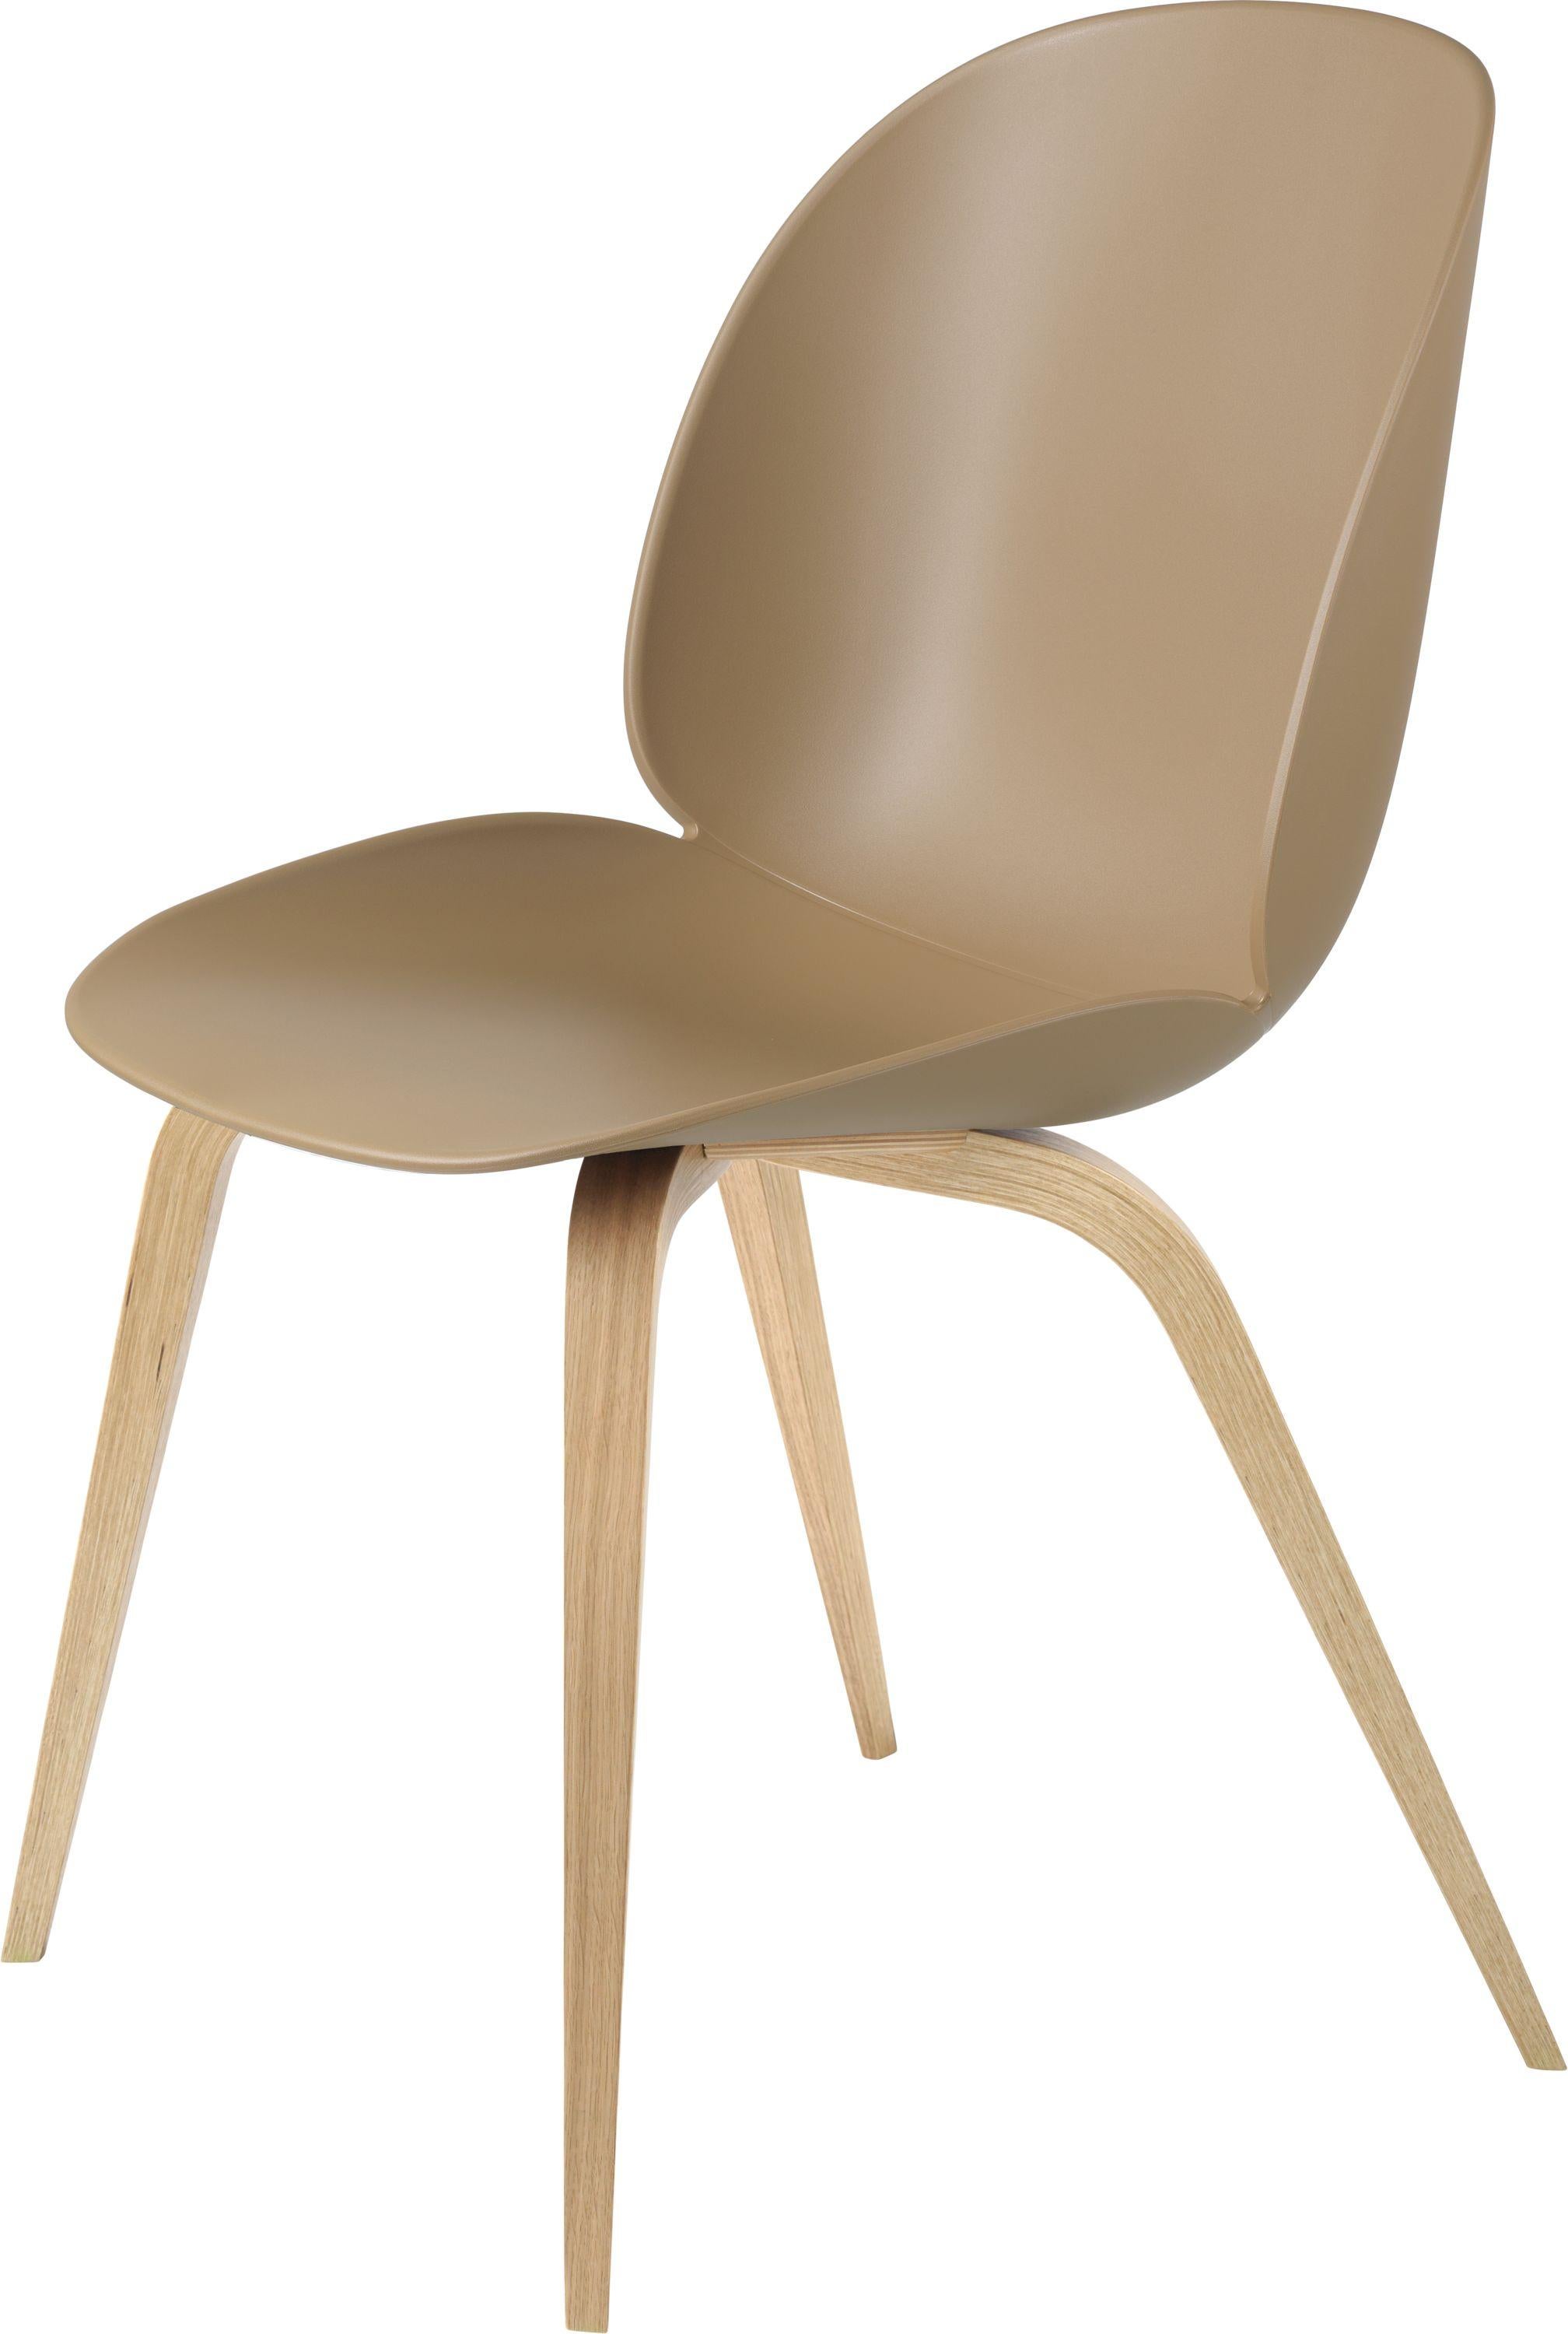 Mid-Century Modern GamFratesi 'Beetle' Dining Chair with Oak Conic Base